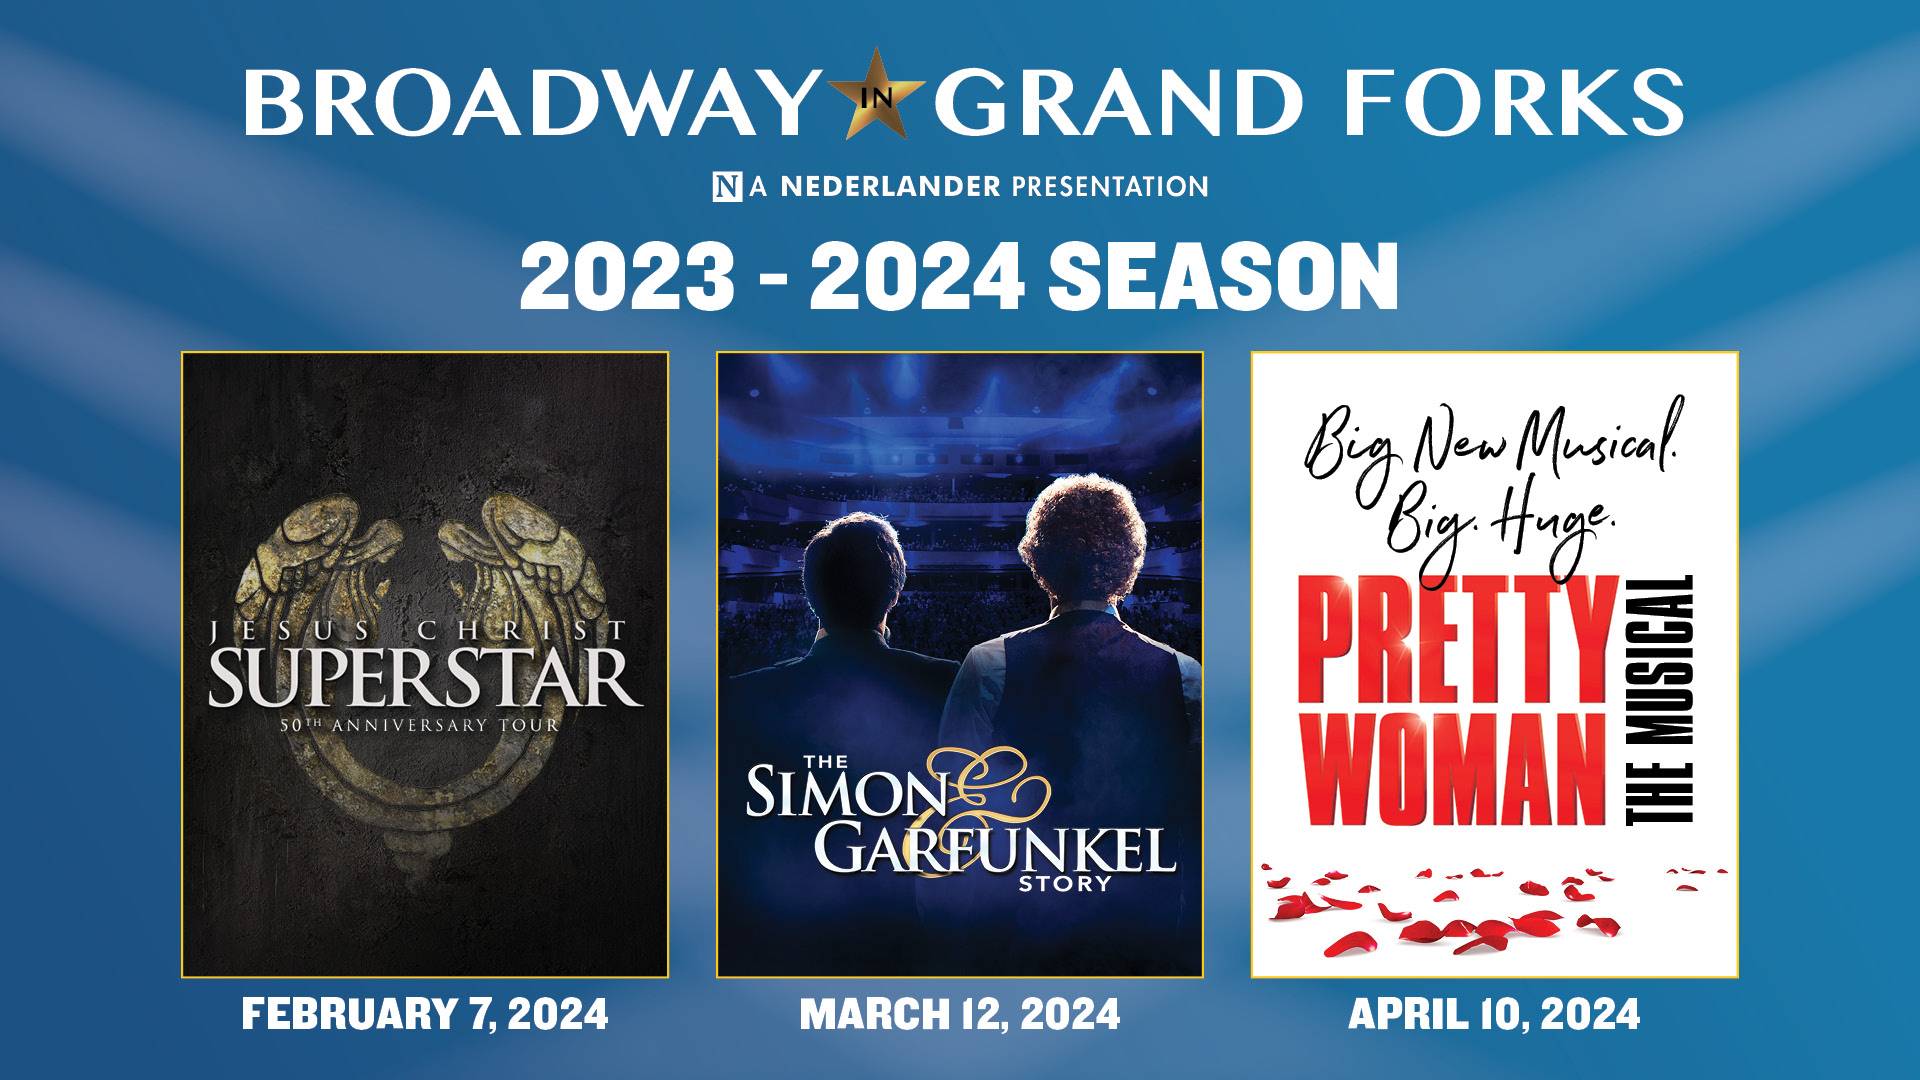 Broadway in Grand Forks 2024 season